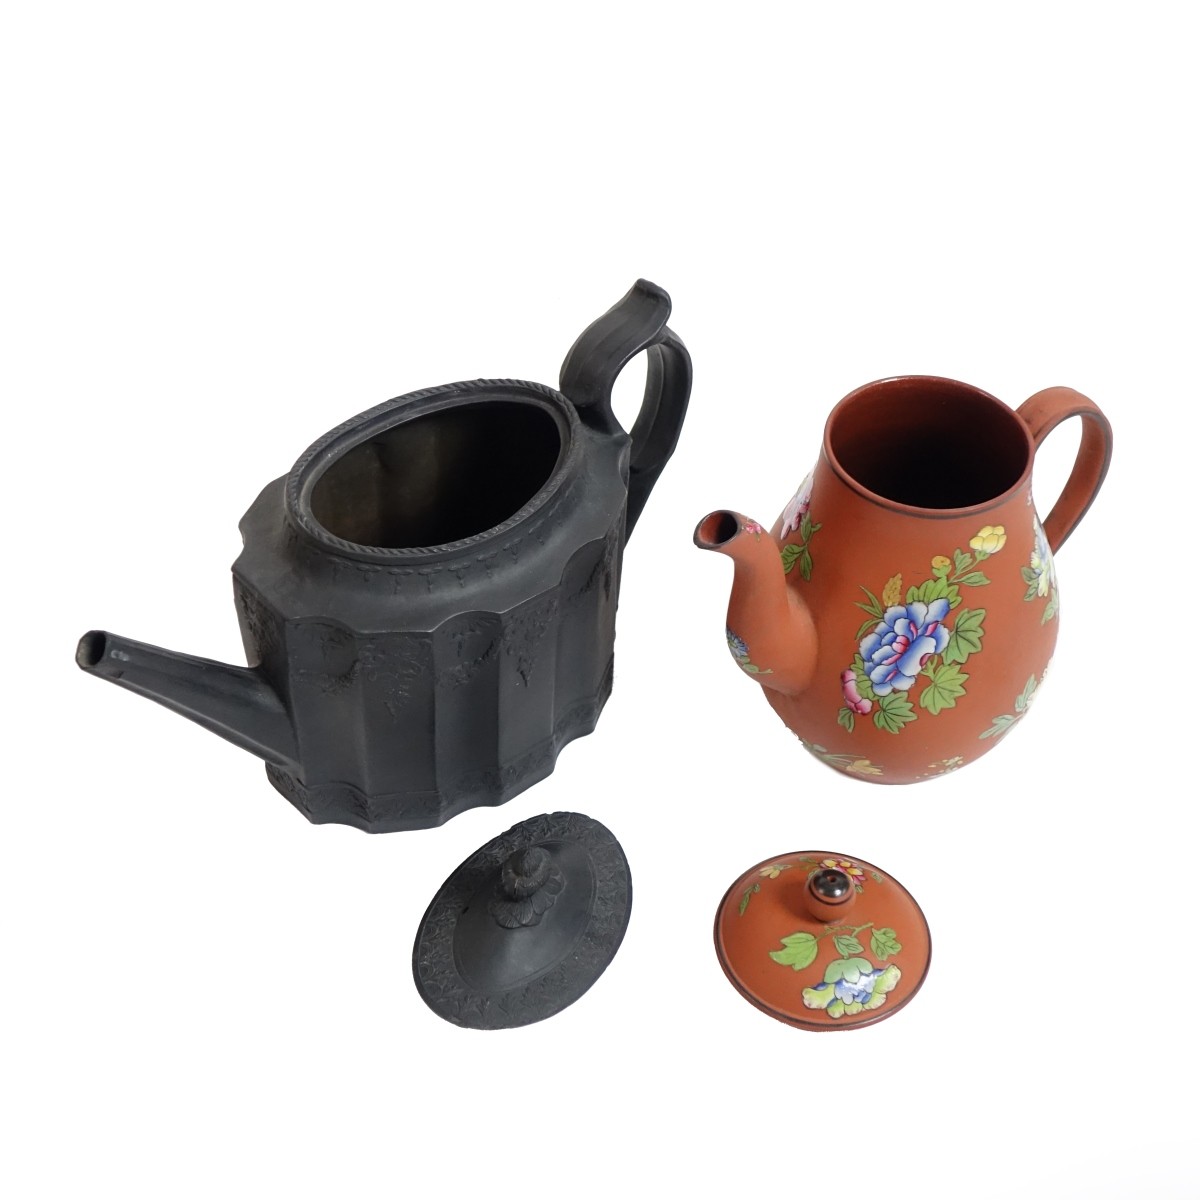 Two (2) Antique English Teapots